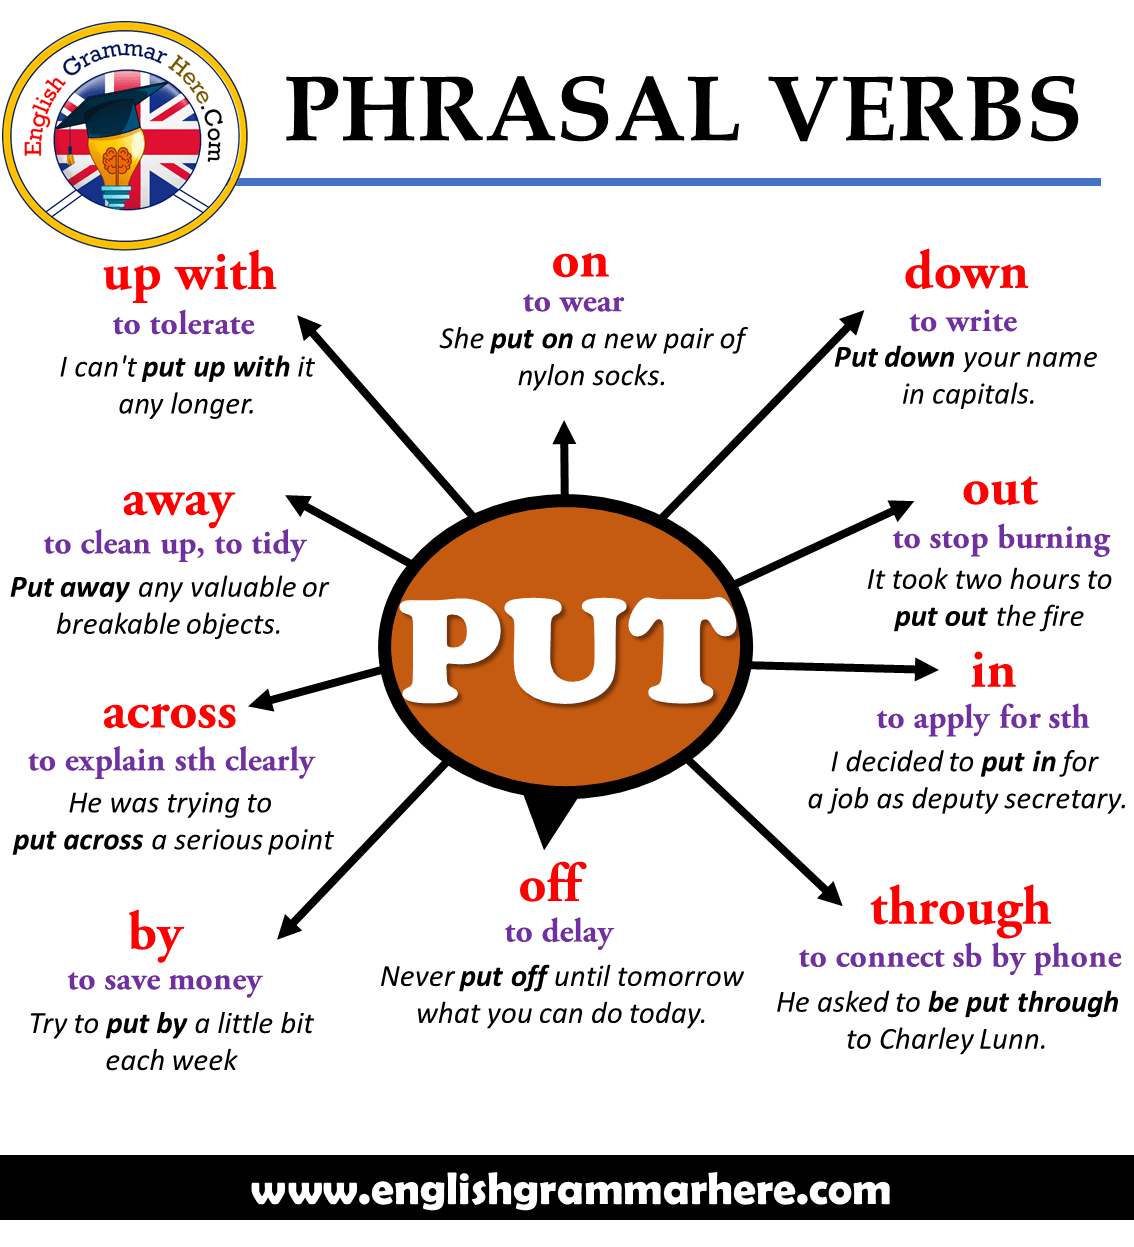 With each win. Фразовые глаголы в английском put. Phrasal verbs таблица put. Английские фразовые глаголы. Phrasal verbs в английском языке.